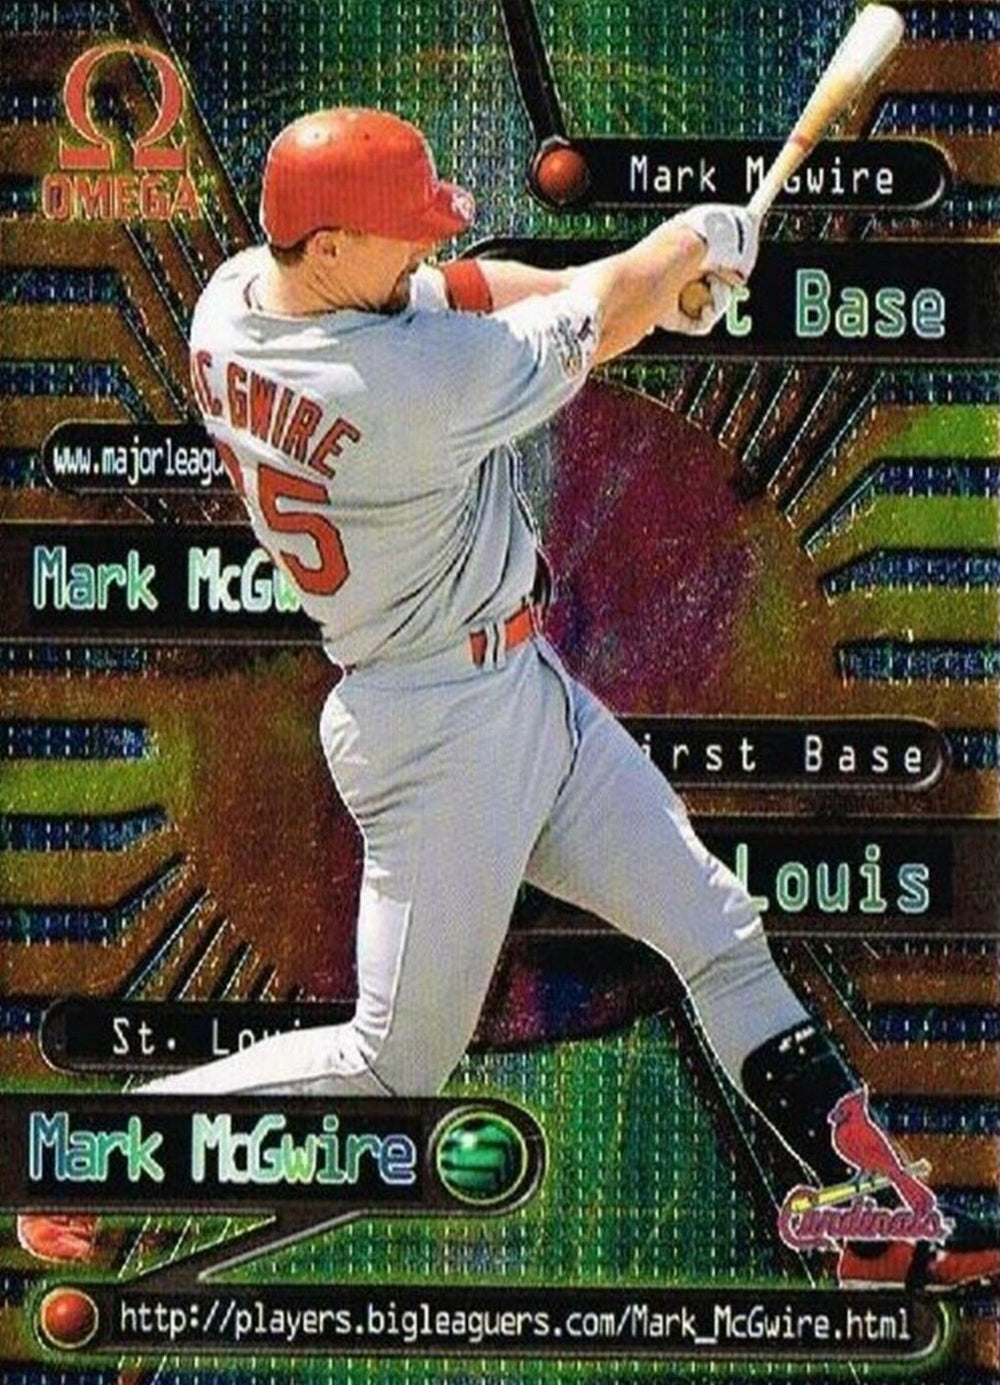 1999 St. Louis Cardinals Mark McGwire Game Worn Jersey.